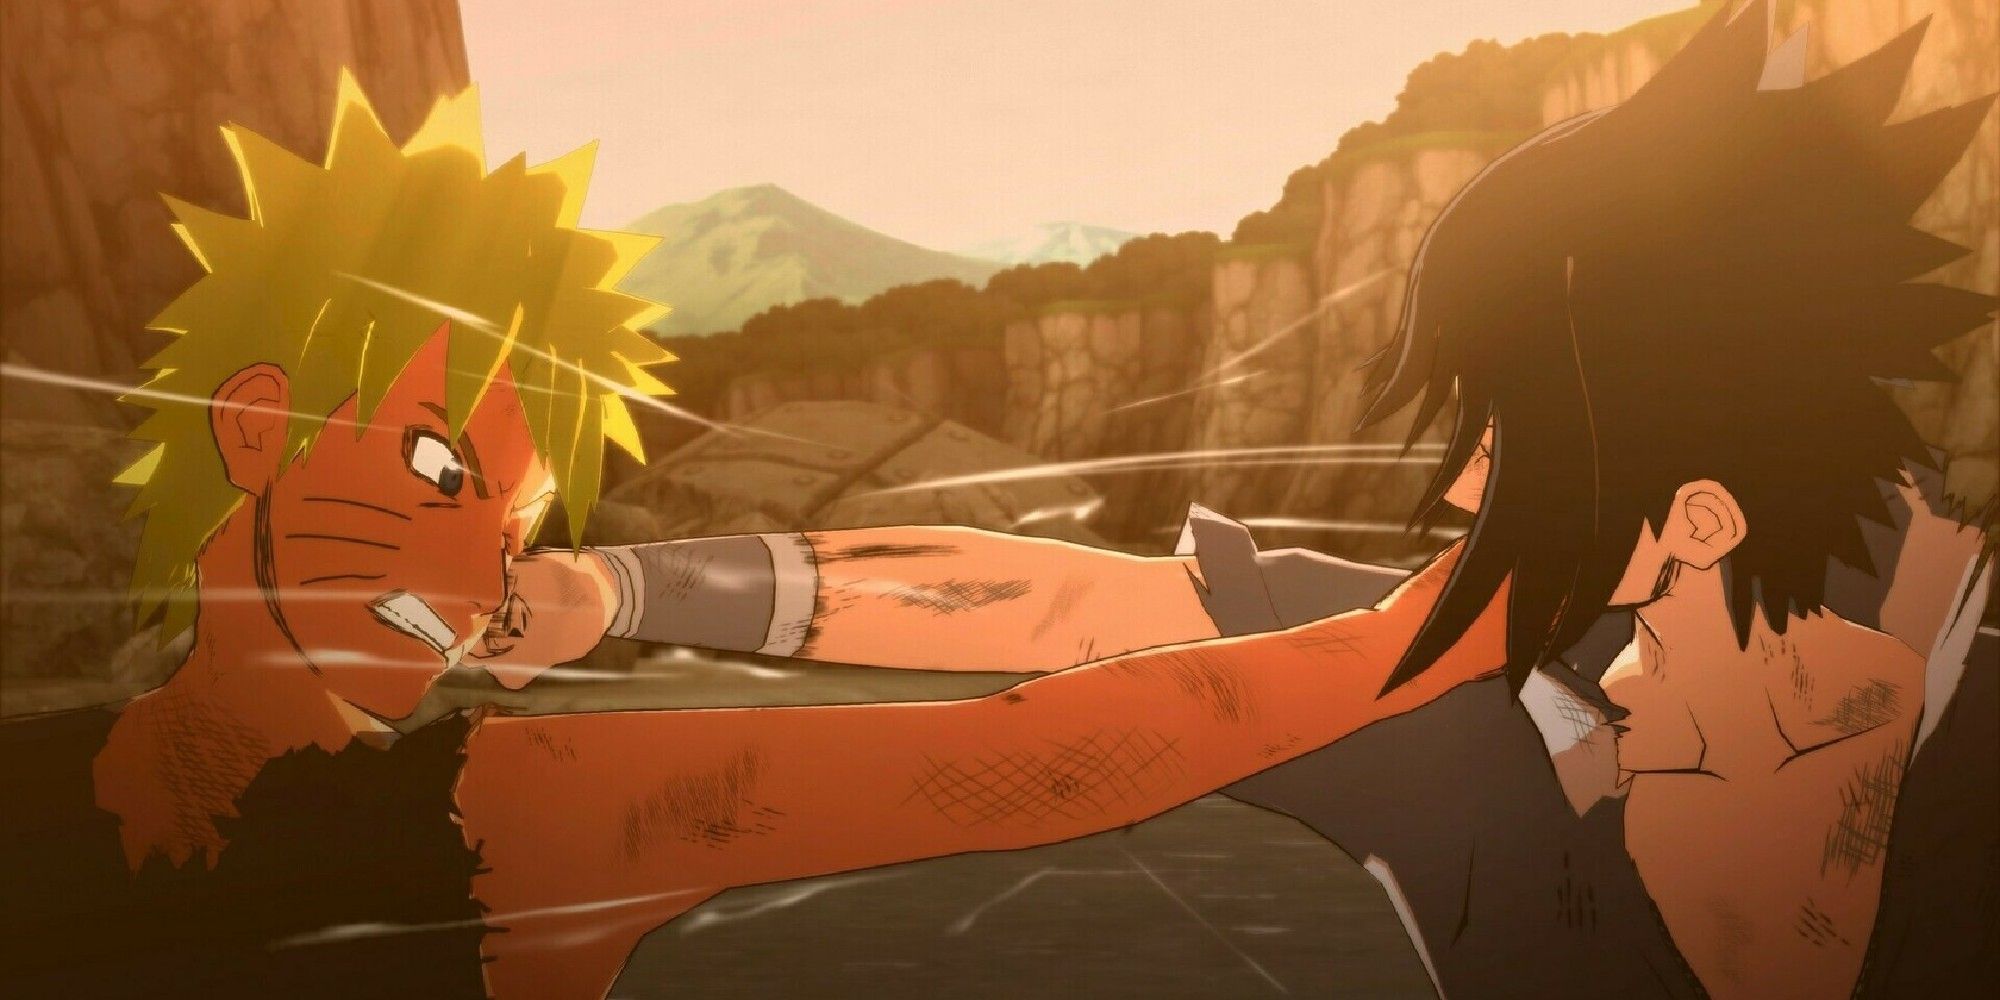 The Final Battle between Naruto and Sasuke